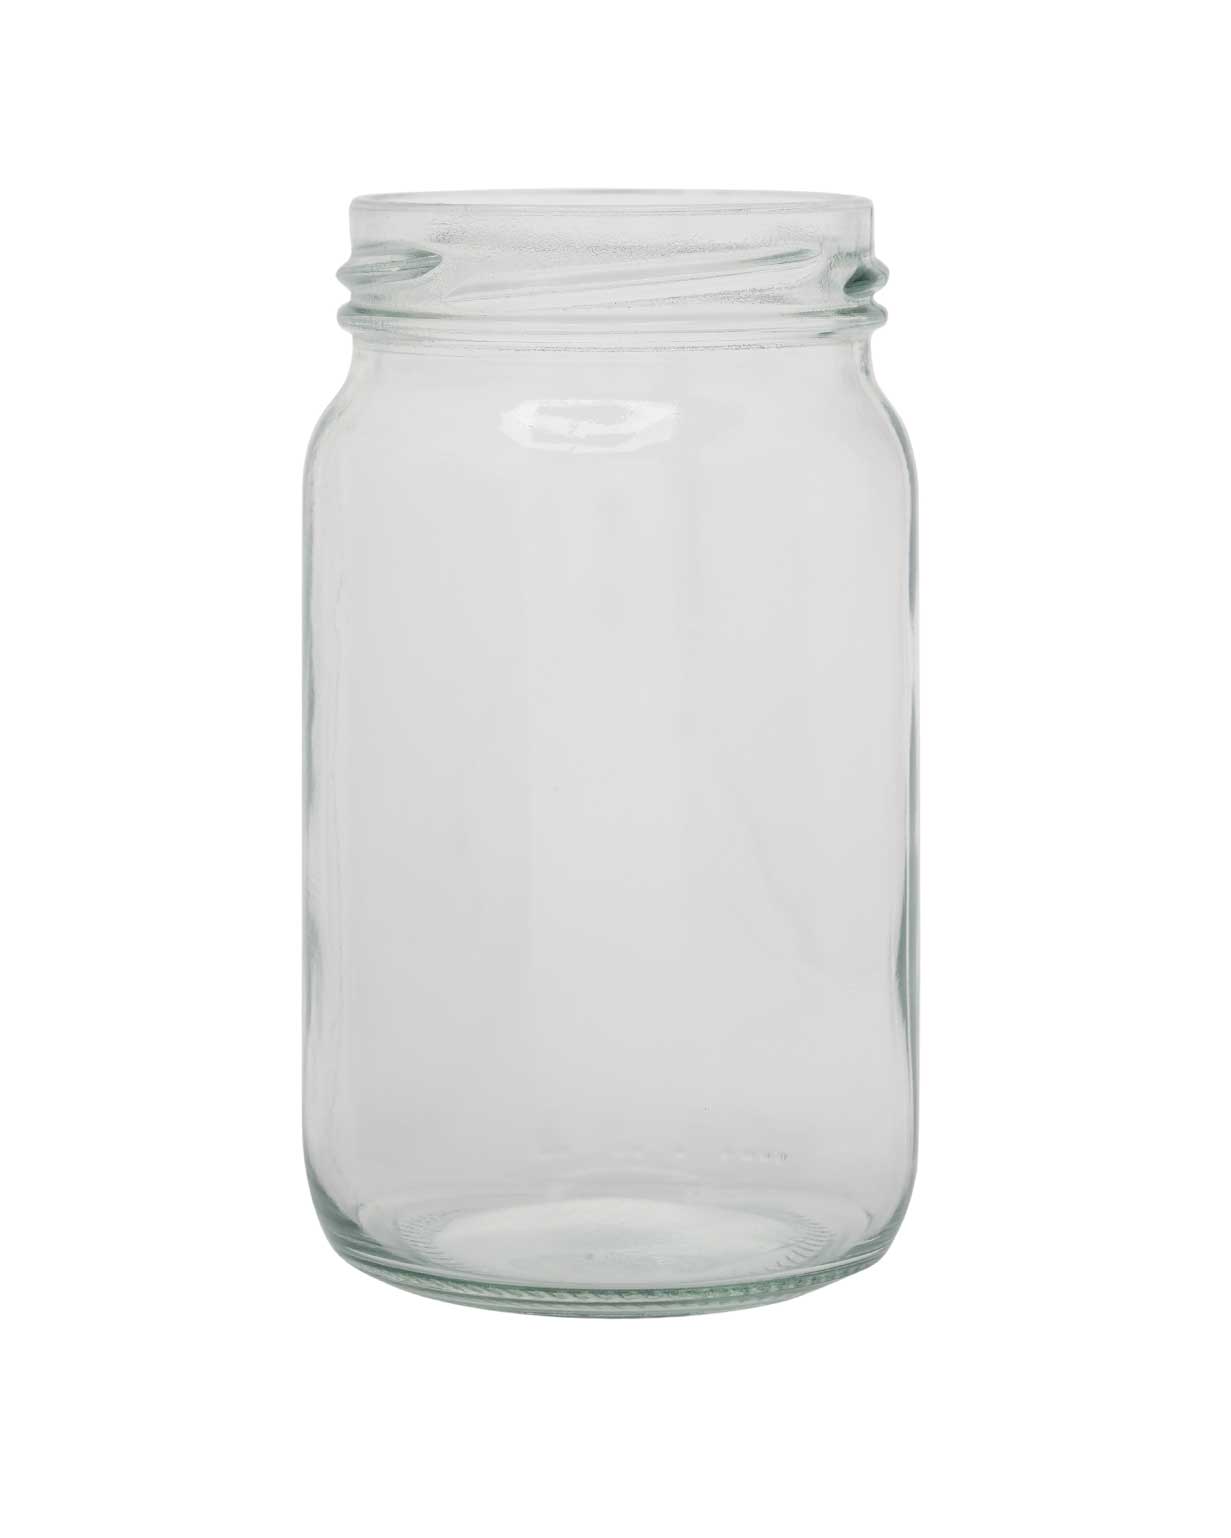 8 oz glass flint mayo jar 58 lug